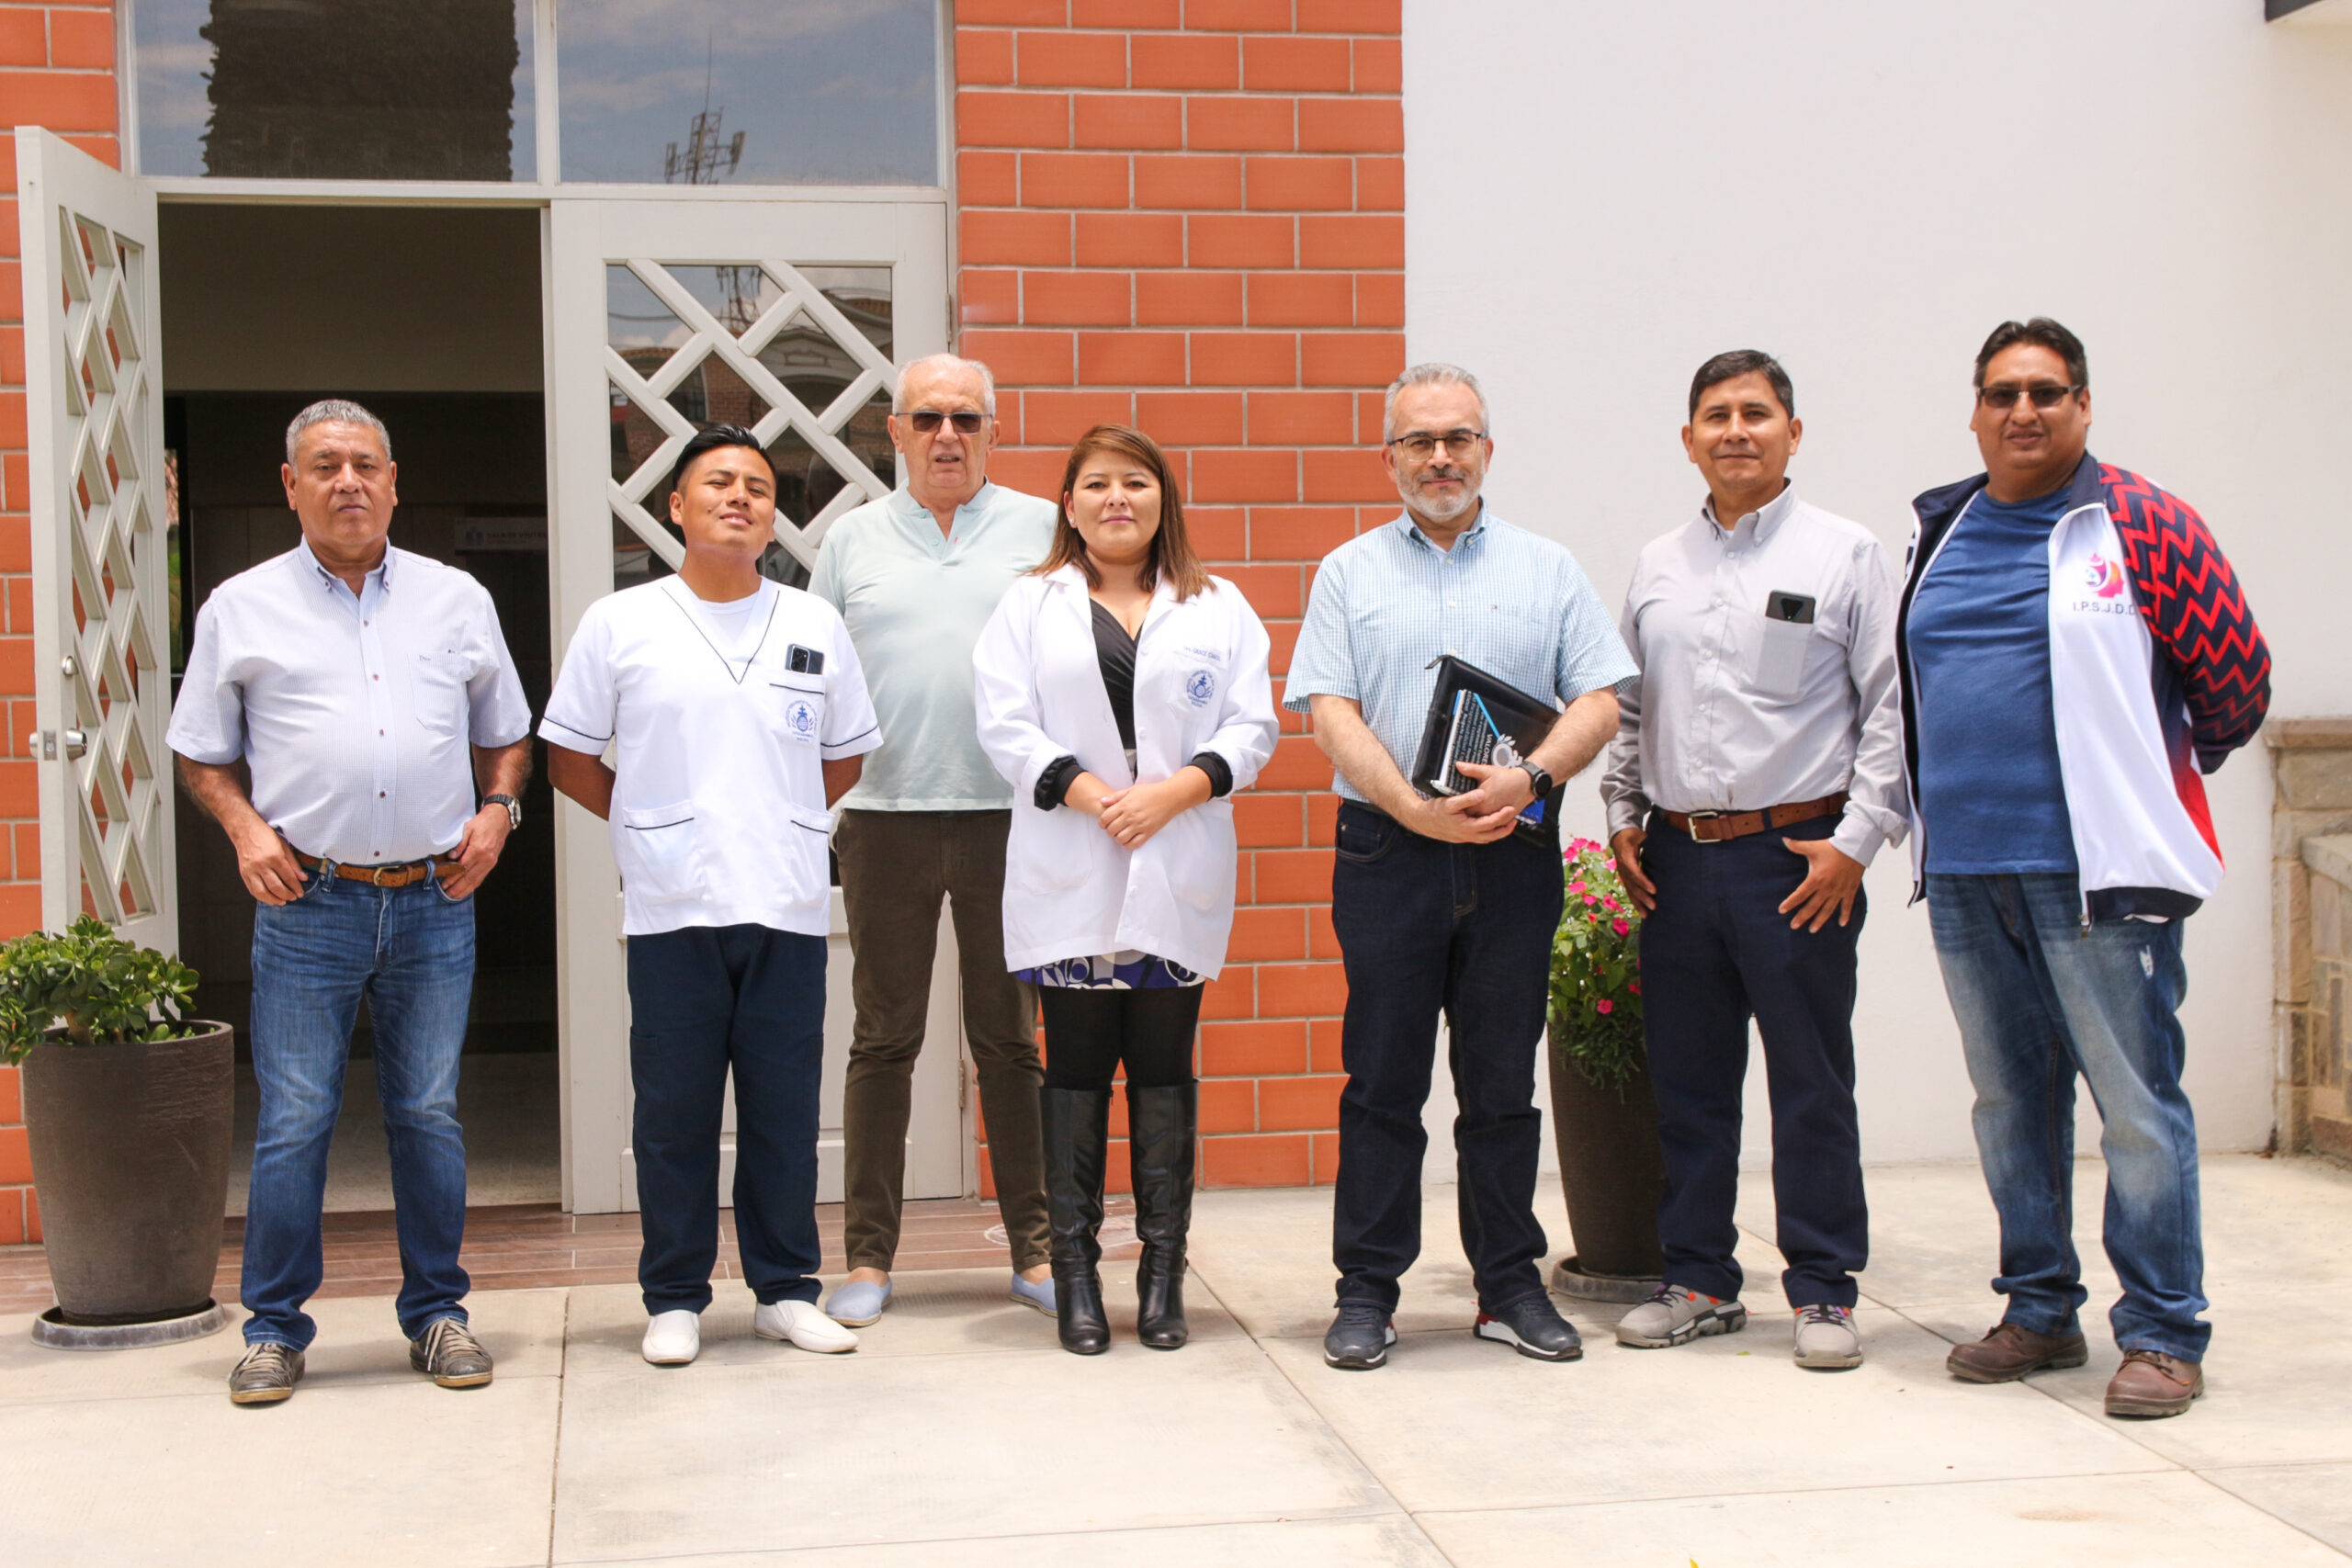 Inició la Visita Canónica en el Instituto Psiquiátrico San Juan de Dios de Cochabamba, Bolivia